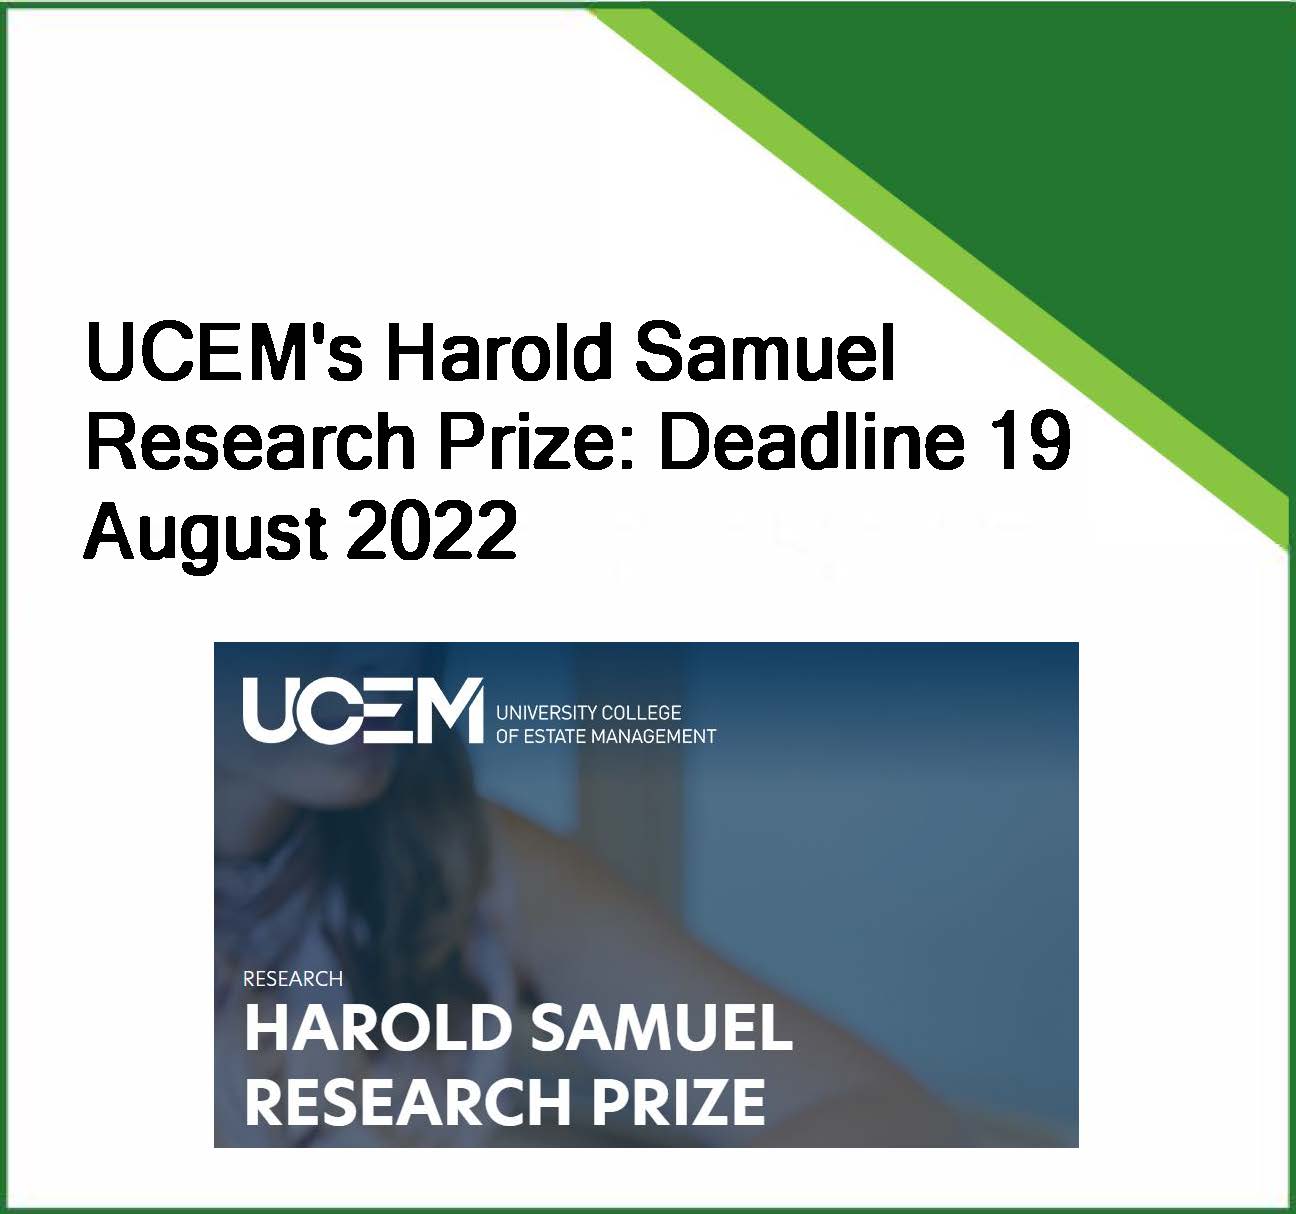 UCEM’s Harold Samuel Research Prize: Deadline 19 August 2022